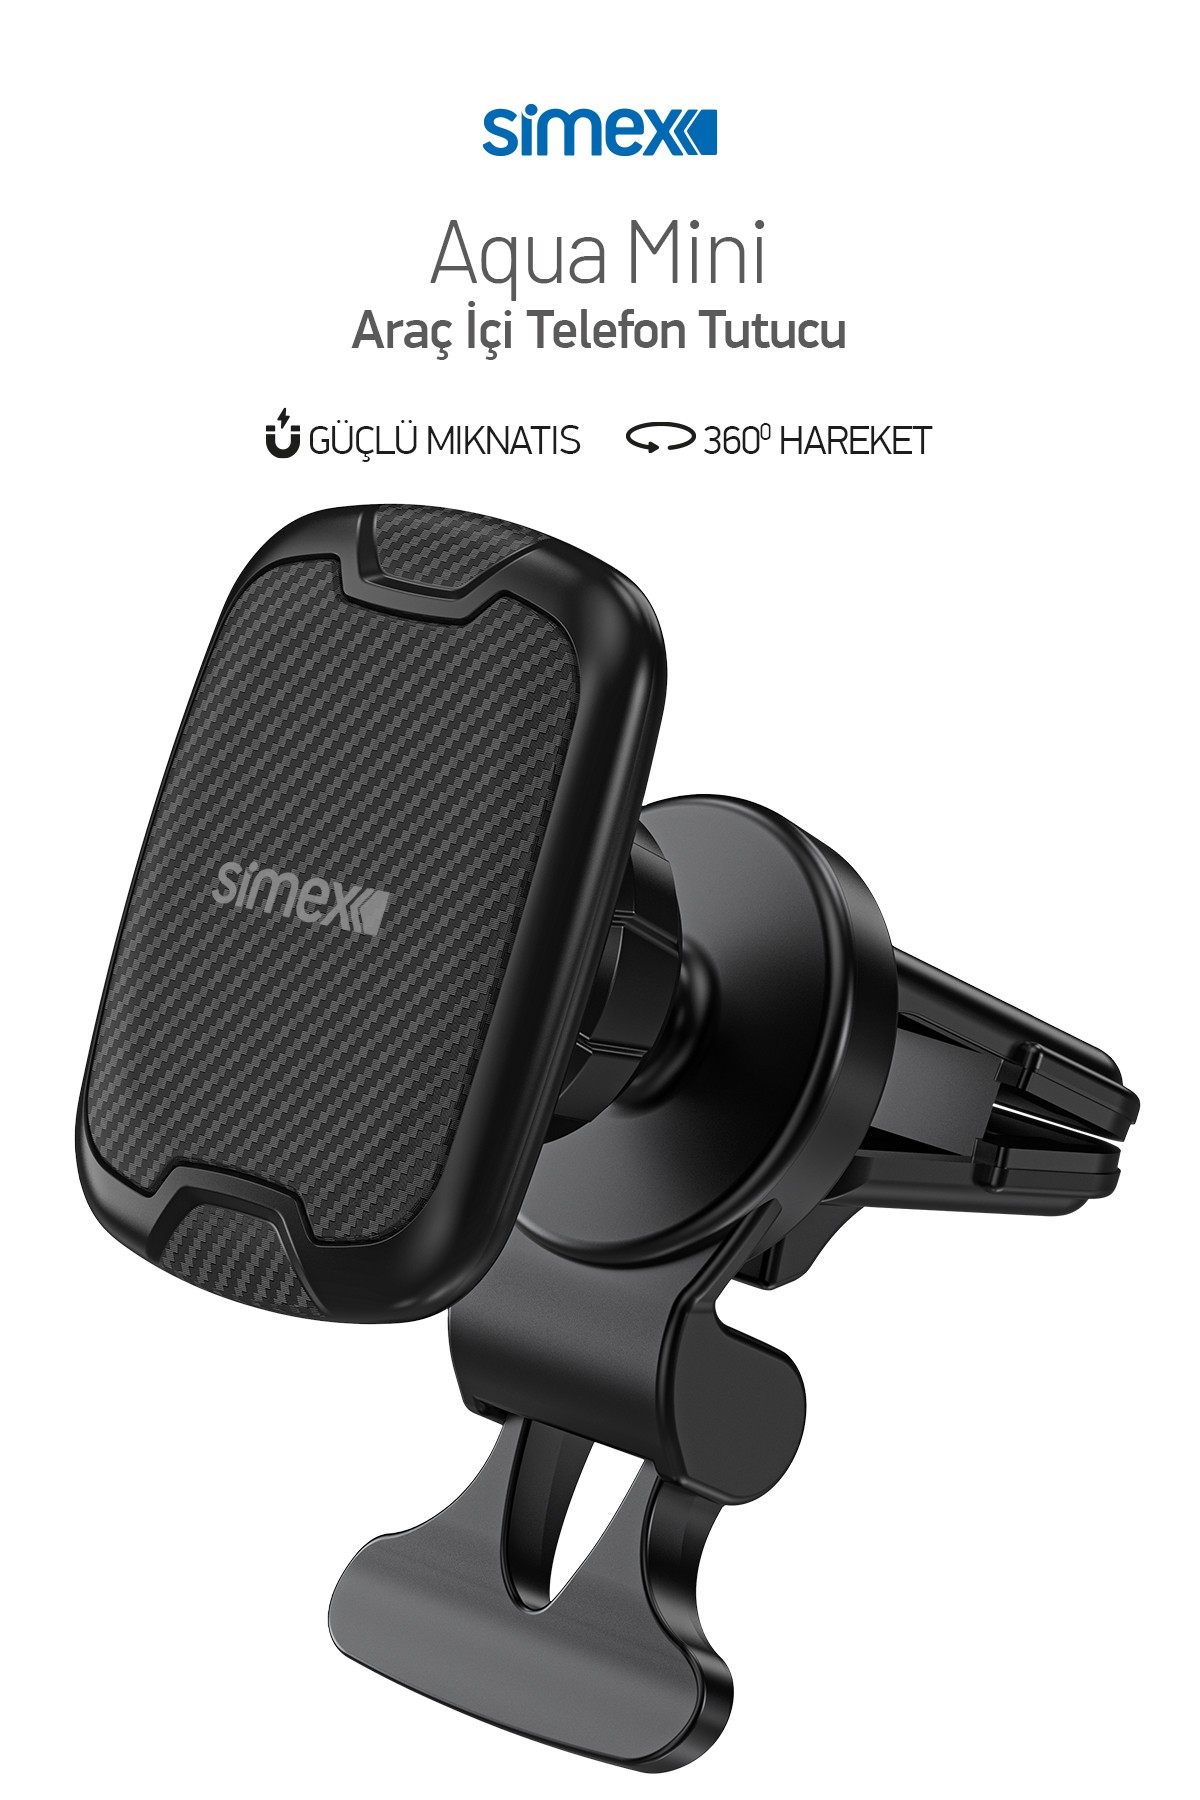 Simex Araç içi Petege Takmali Güçlü Mıknatıs Telefon Tutucu Aqua Mini